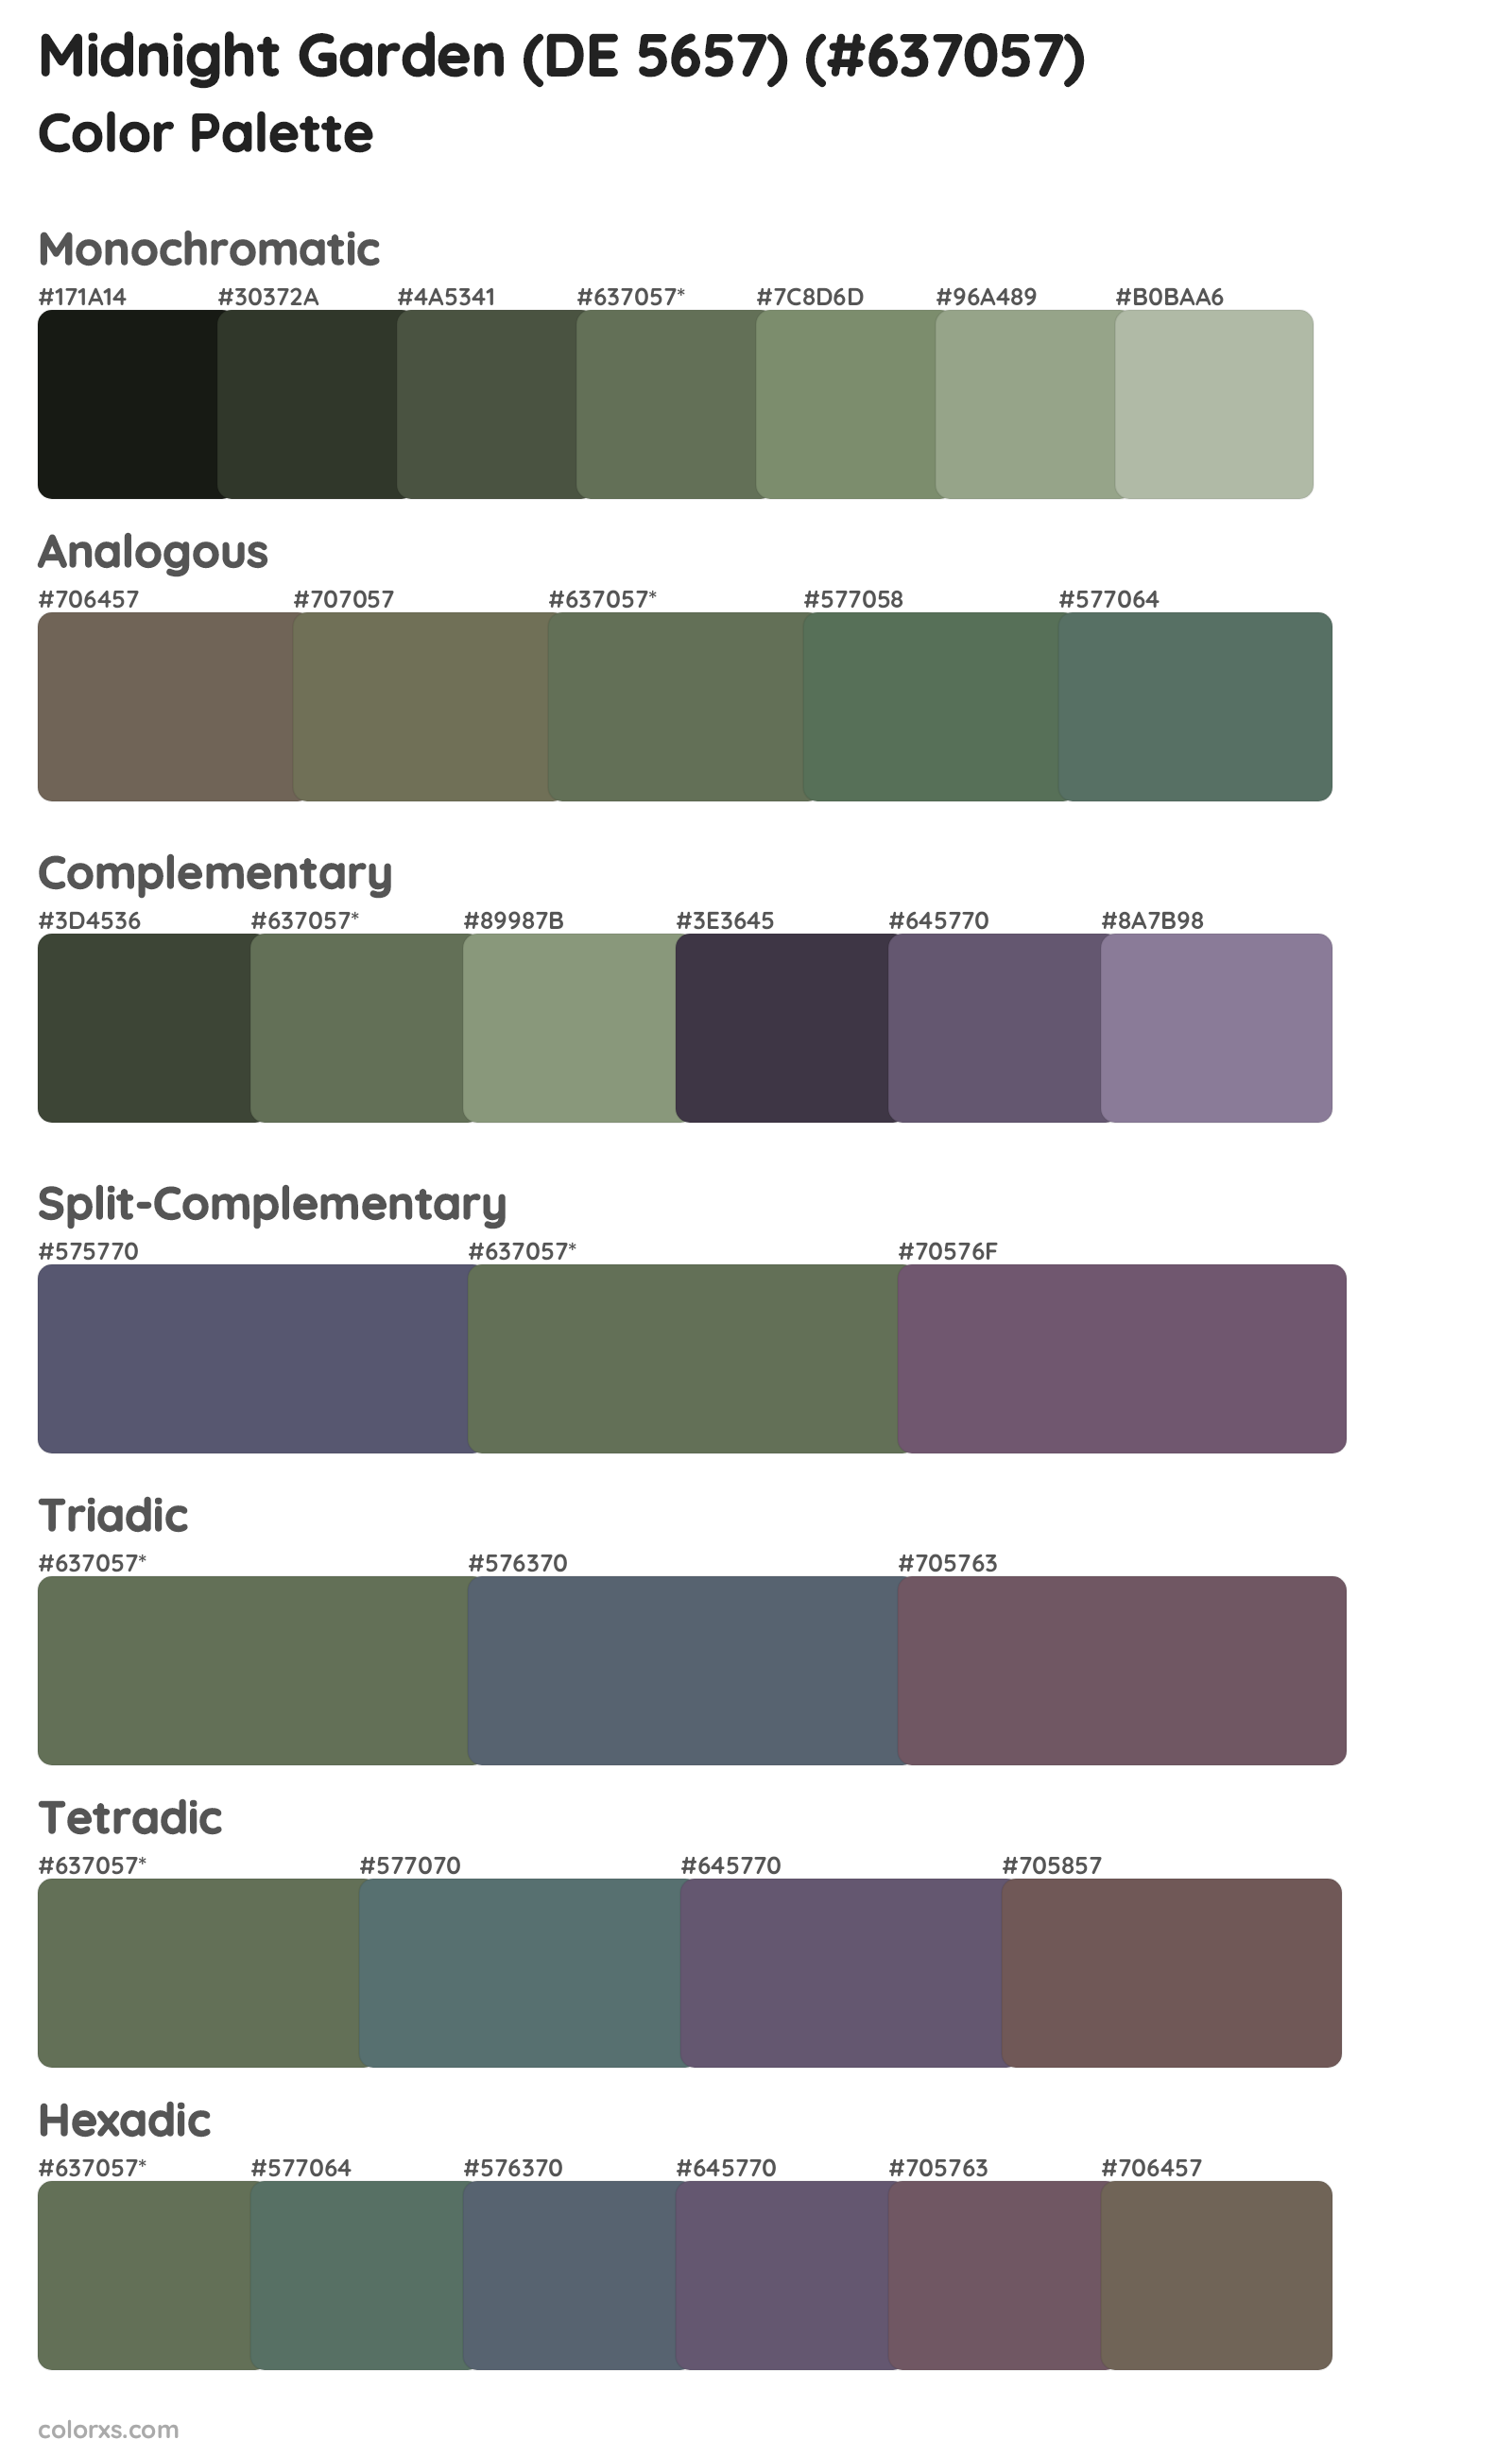 Midnight Garden (DE 5657) Color Scheme Palettes